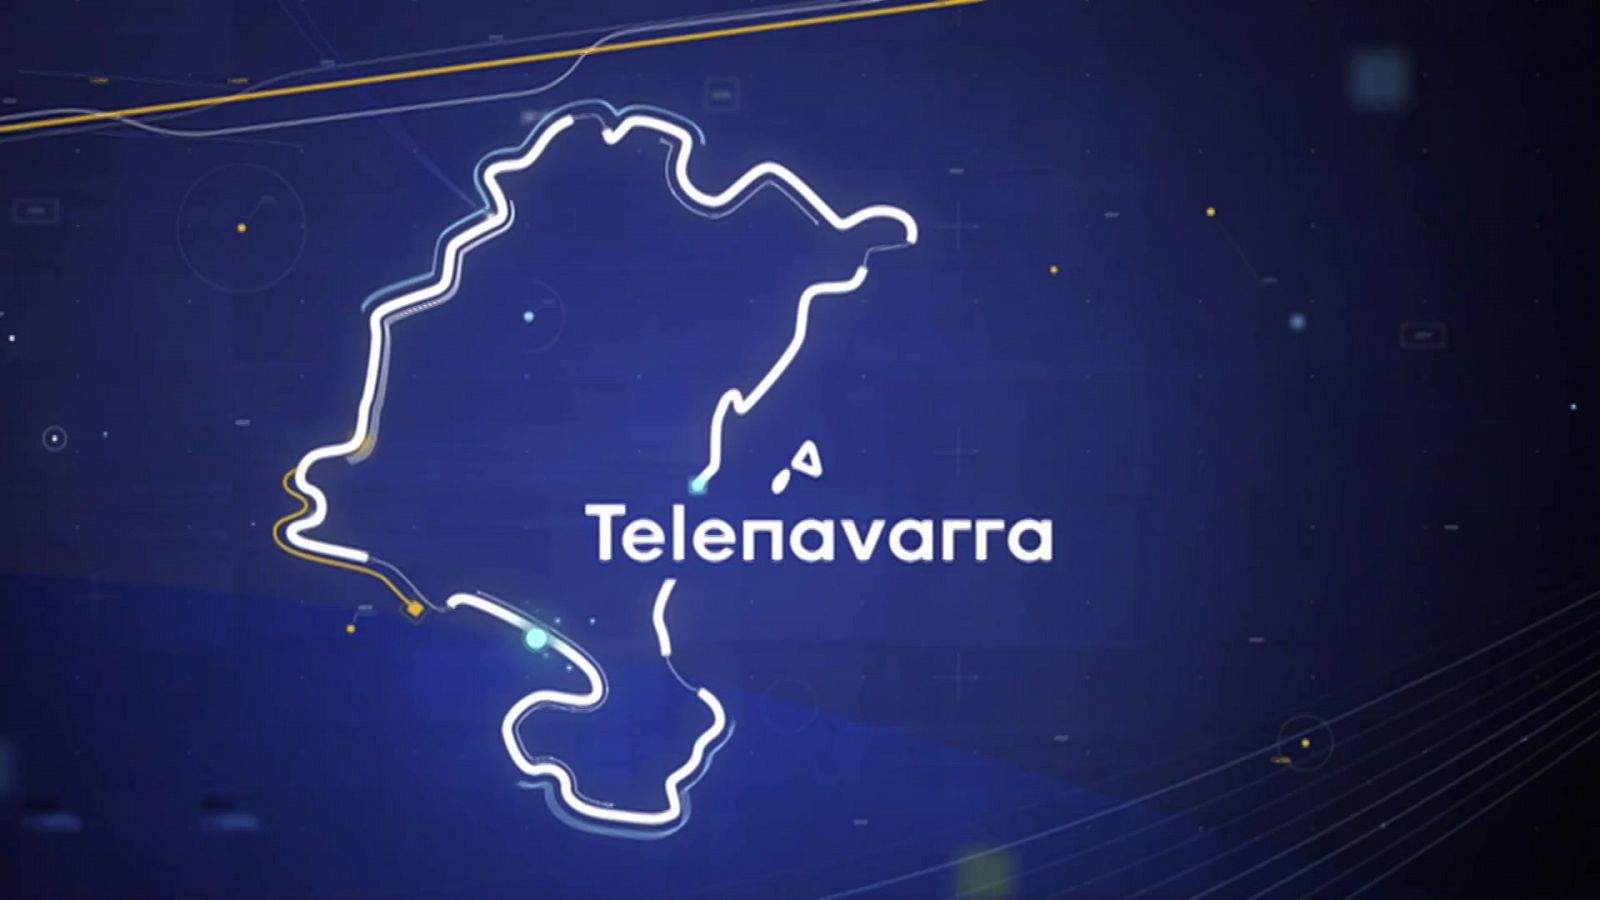 Telenavarra 2 - 3/5/2022 - RTVE.es